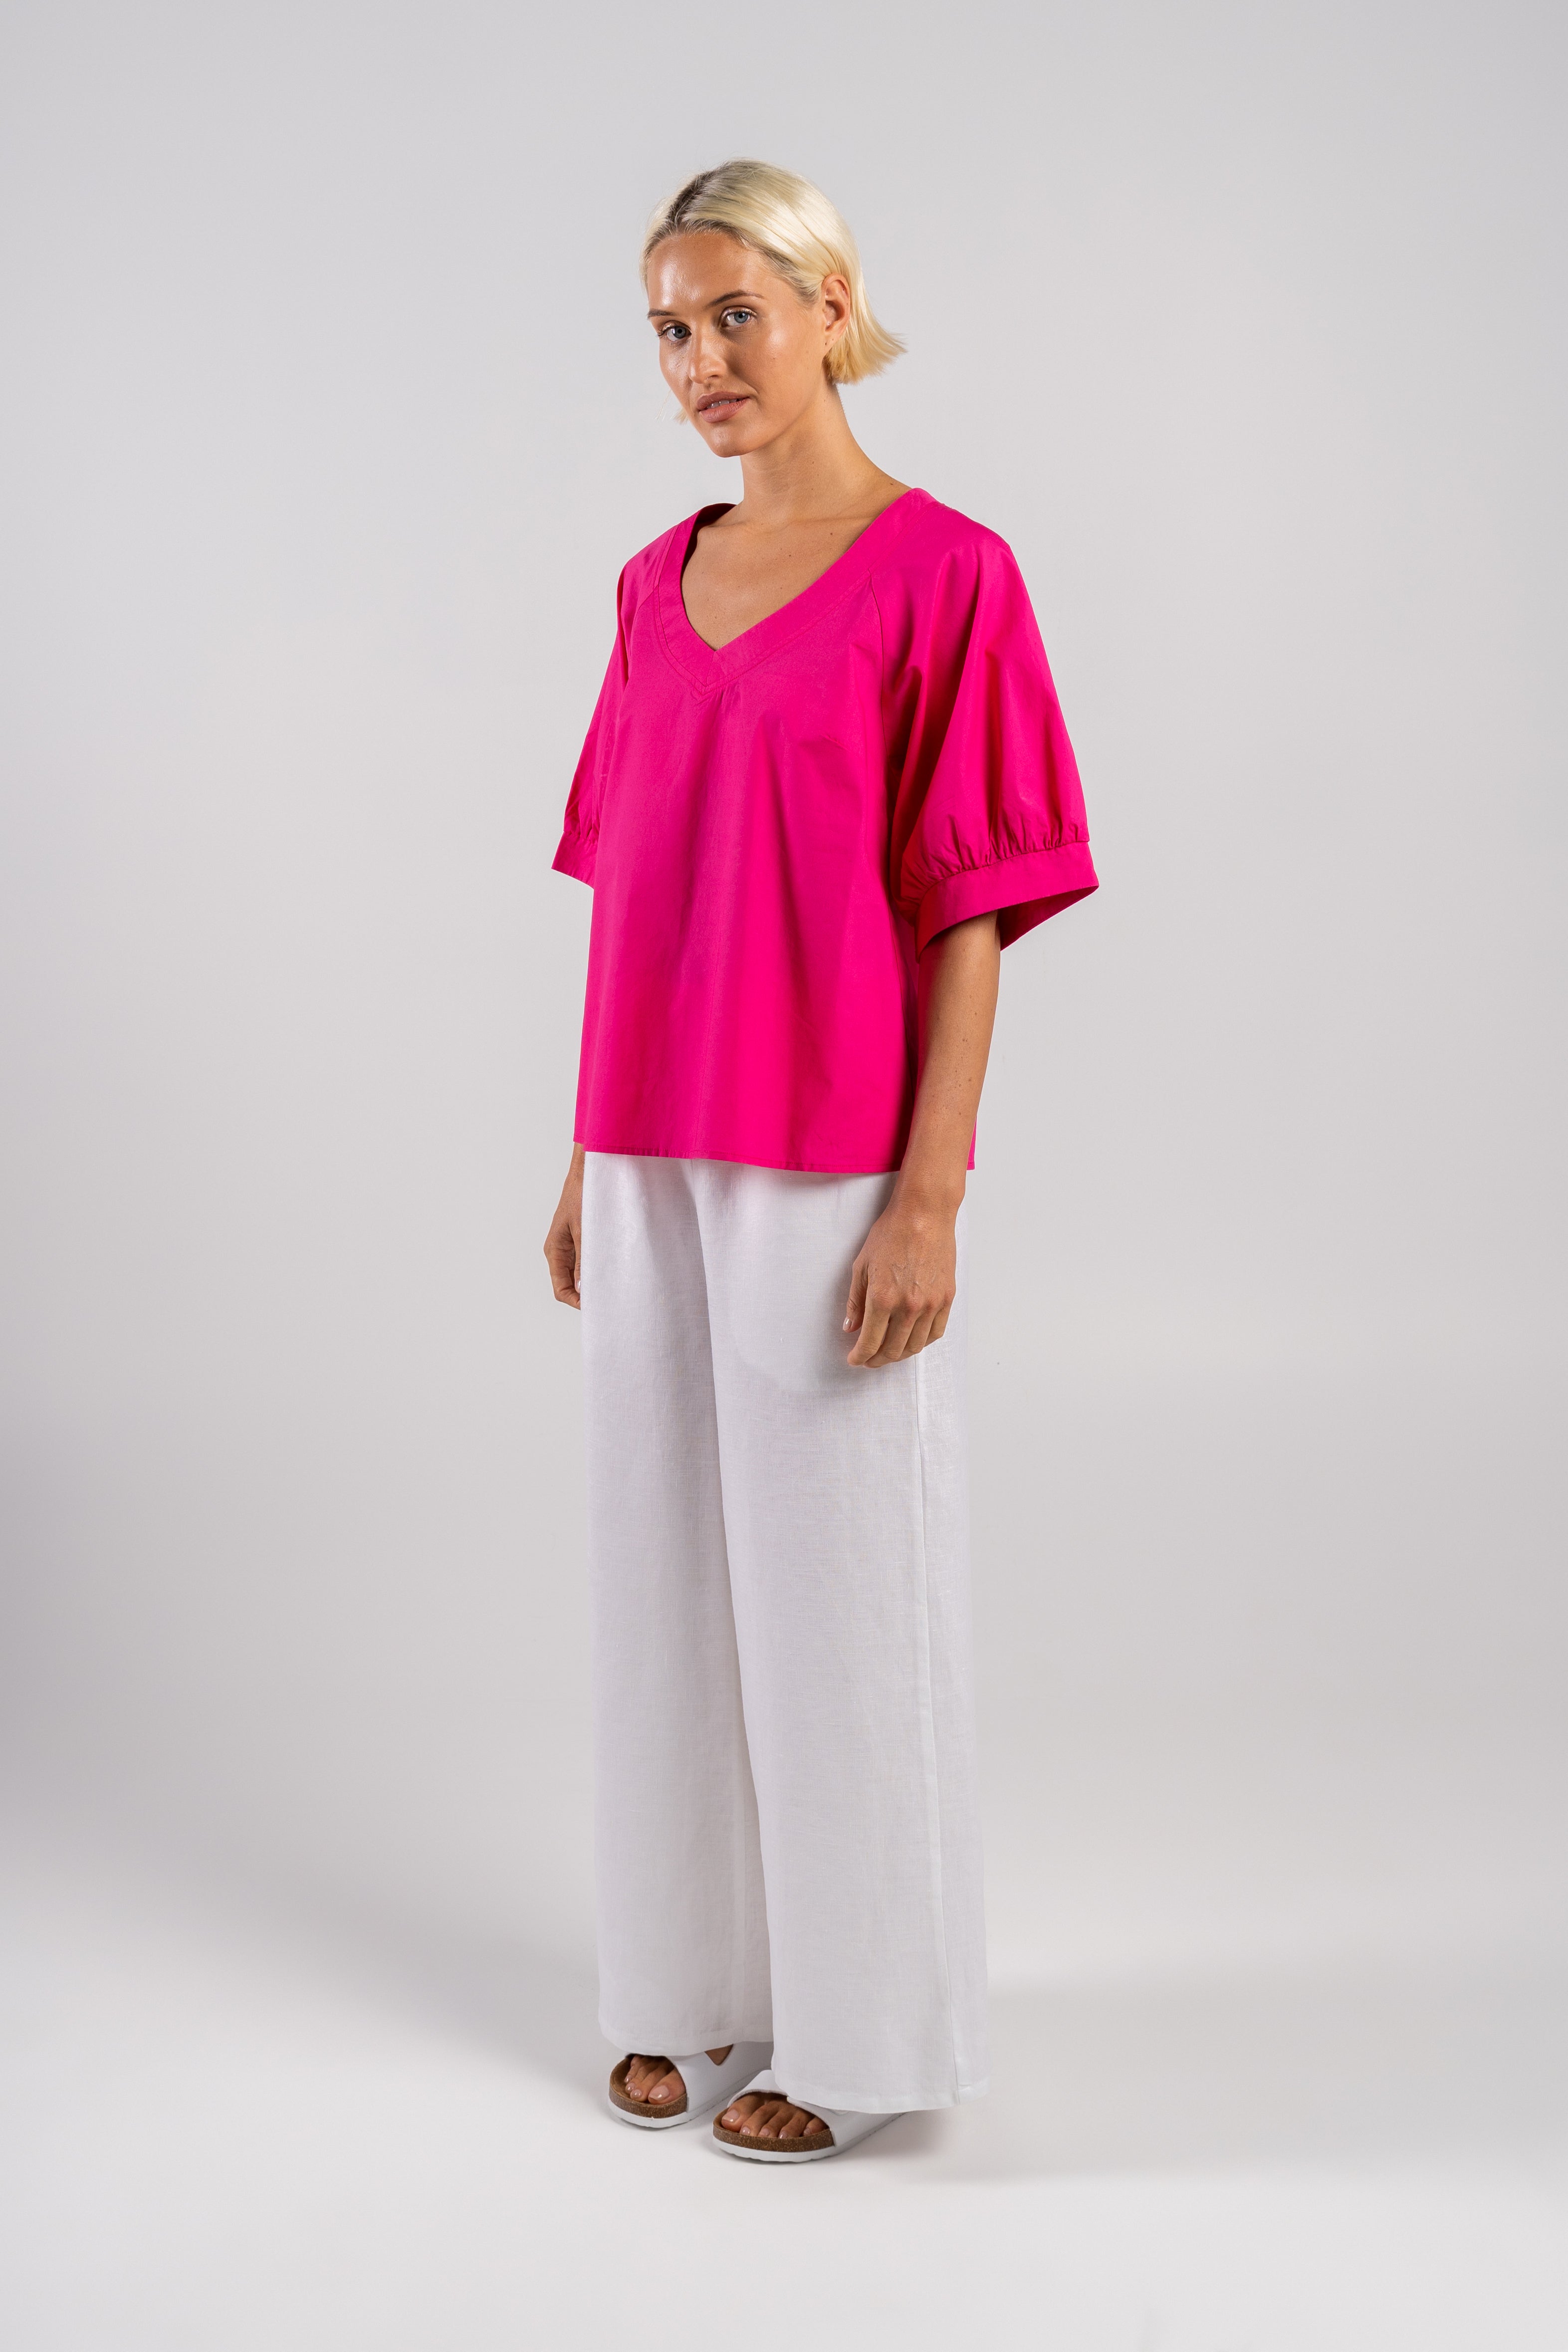 Wear Colour Half Sleeve Deep V Top - Pink